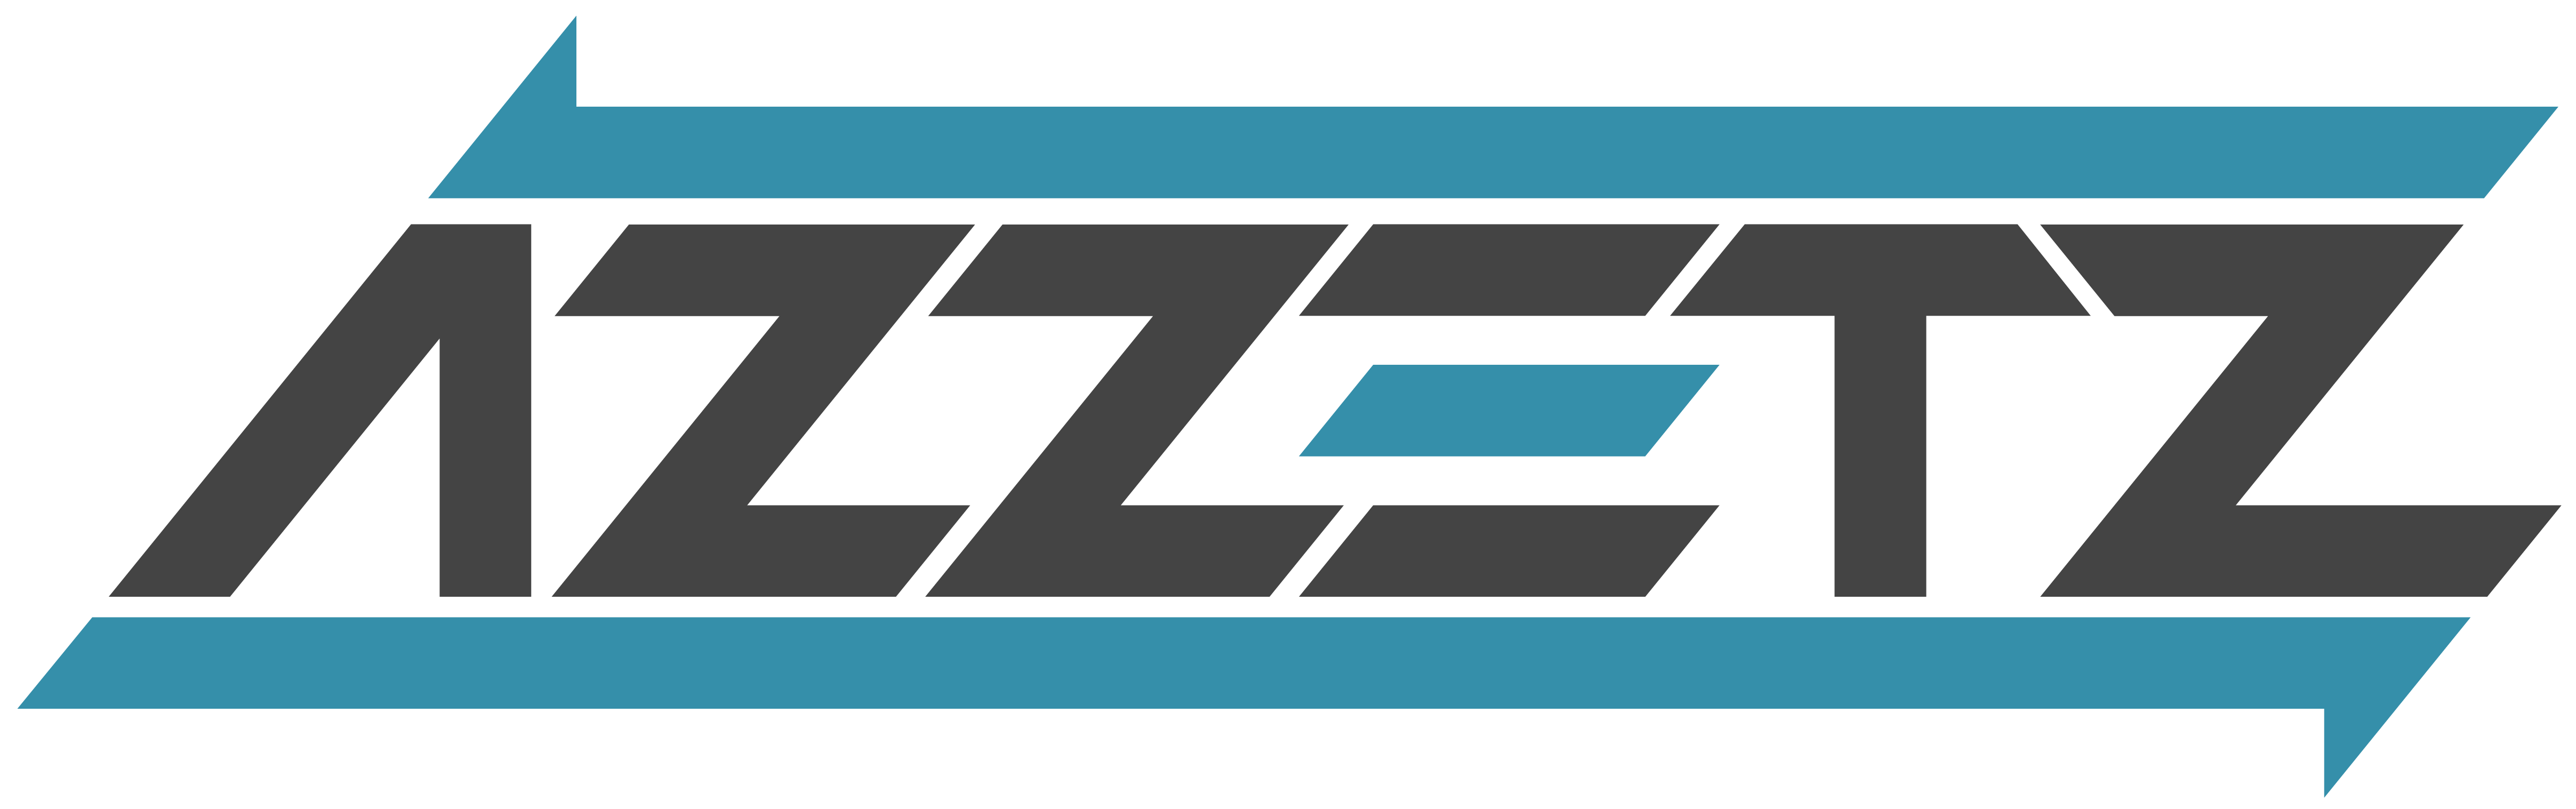 azzetz-logo